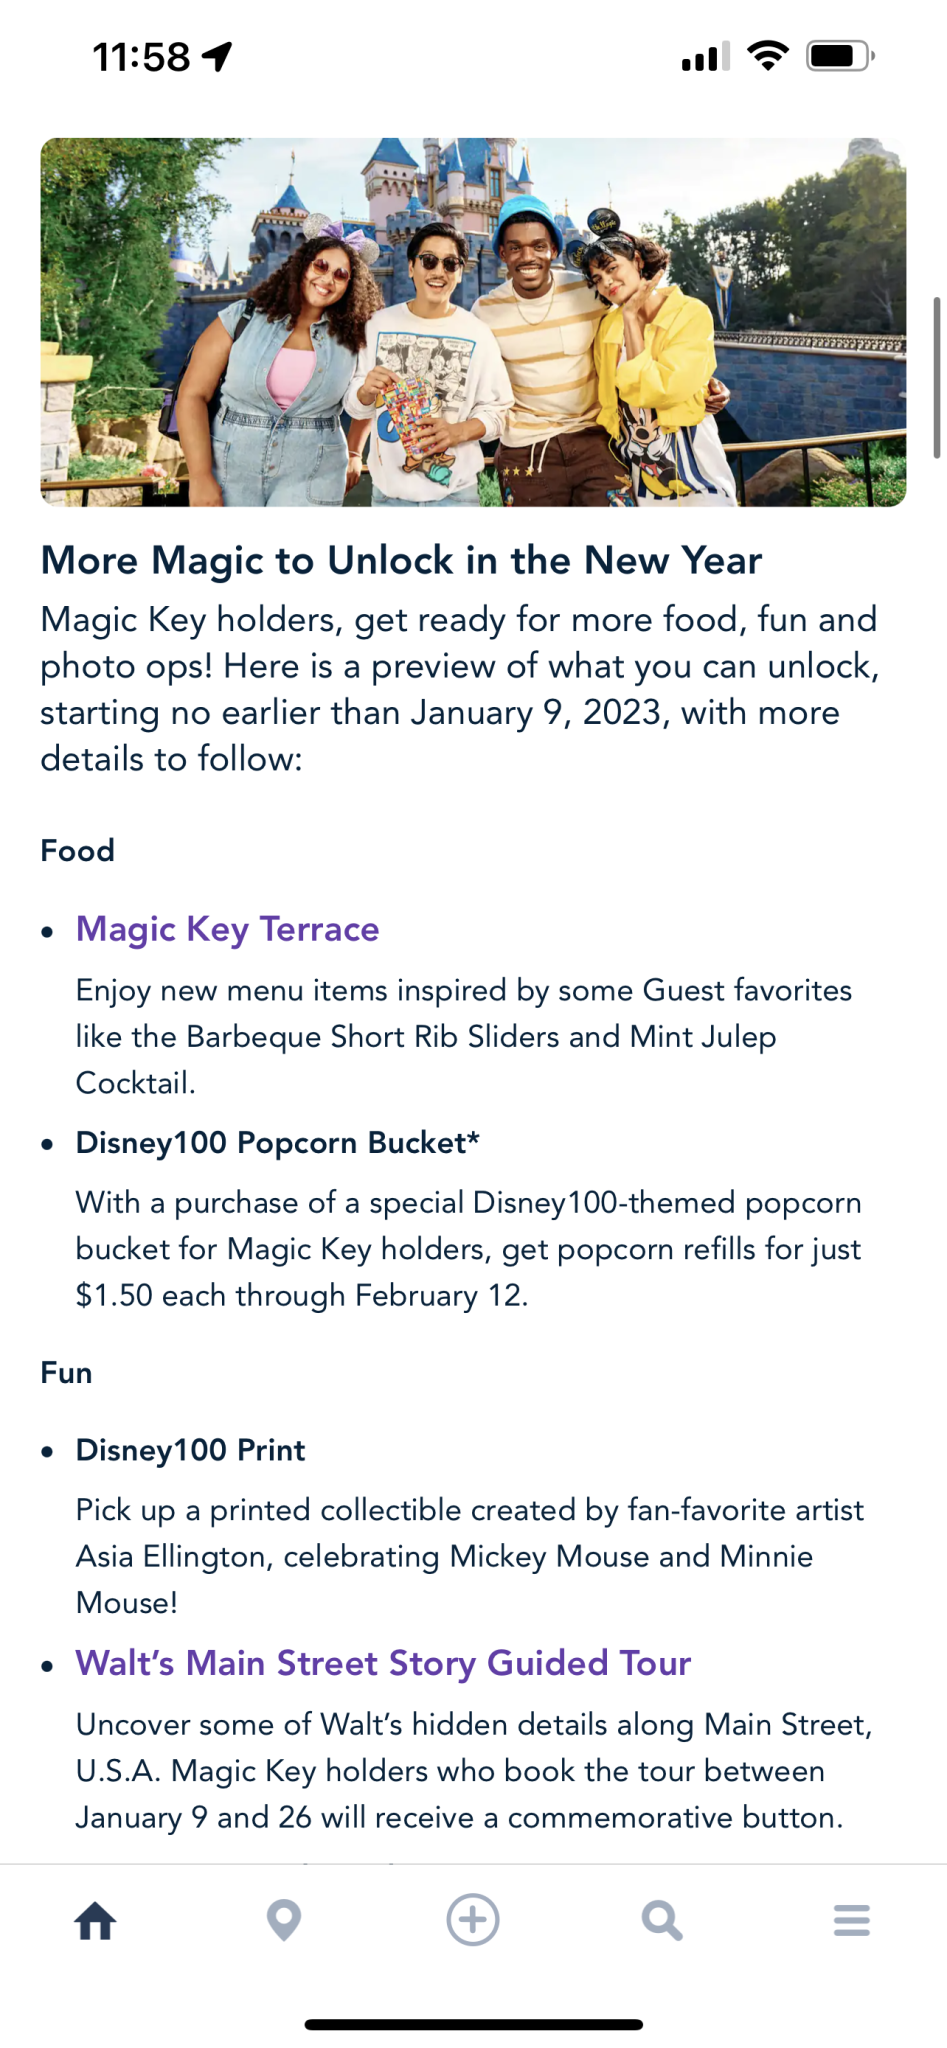 NEW PERKS Announced for Disneyland Magic Key Holders the disney food blog